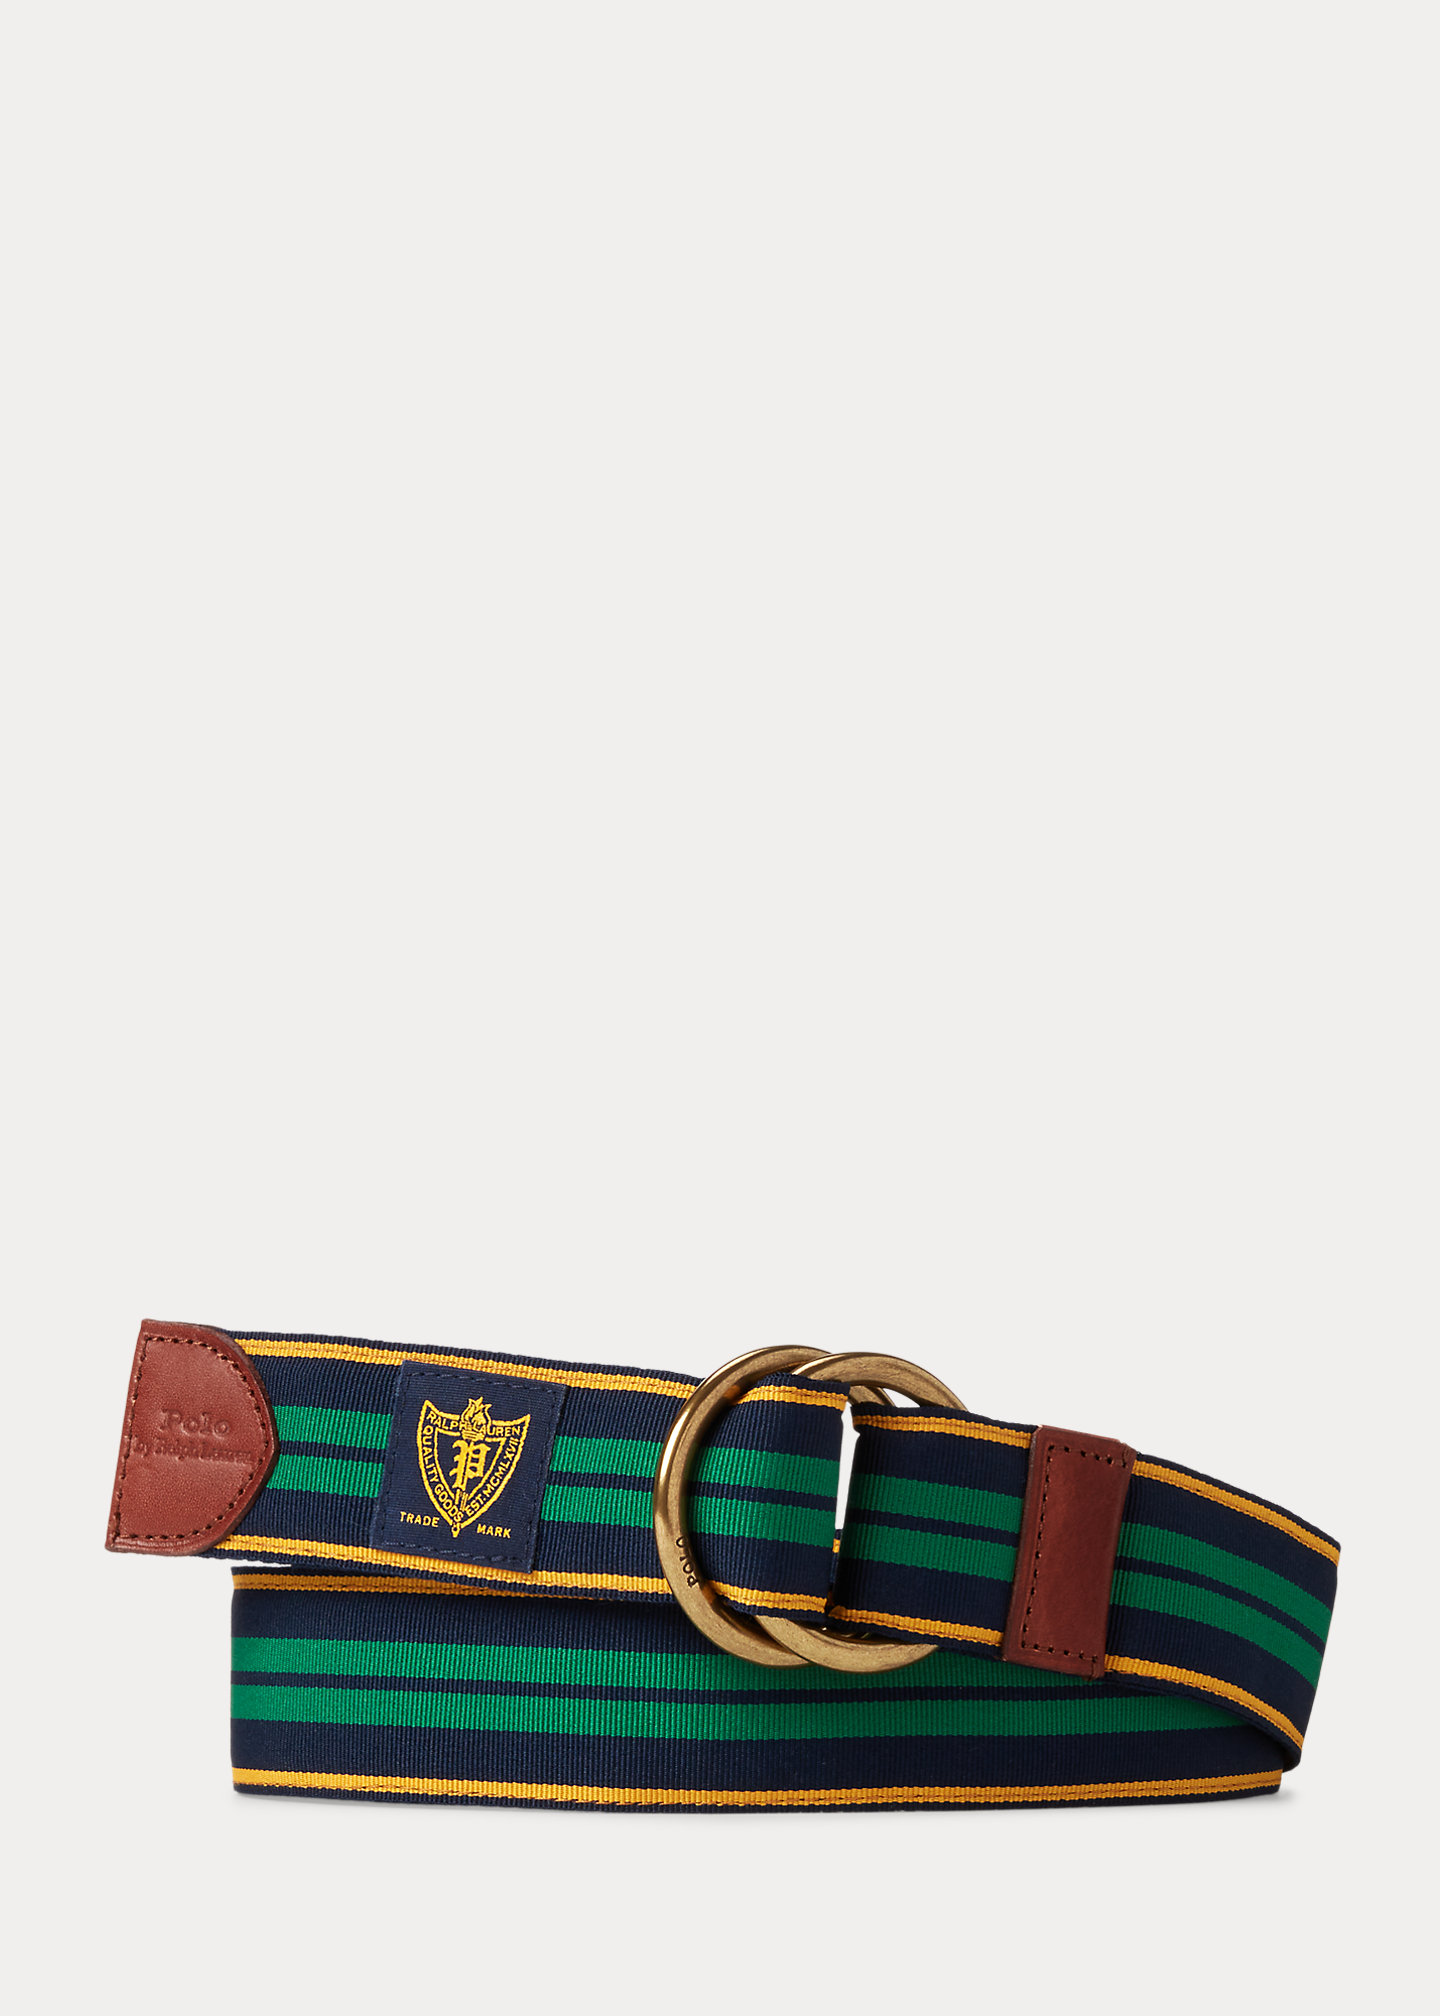 Leather-Trim Striped Belt